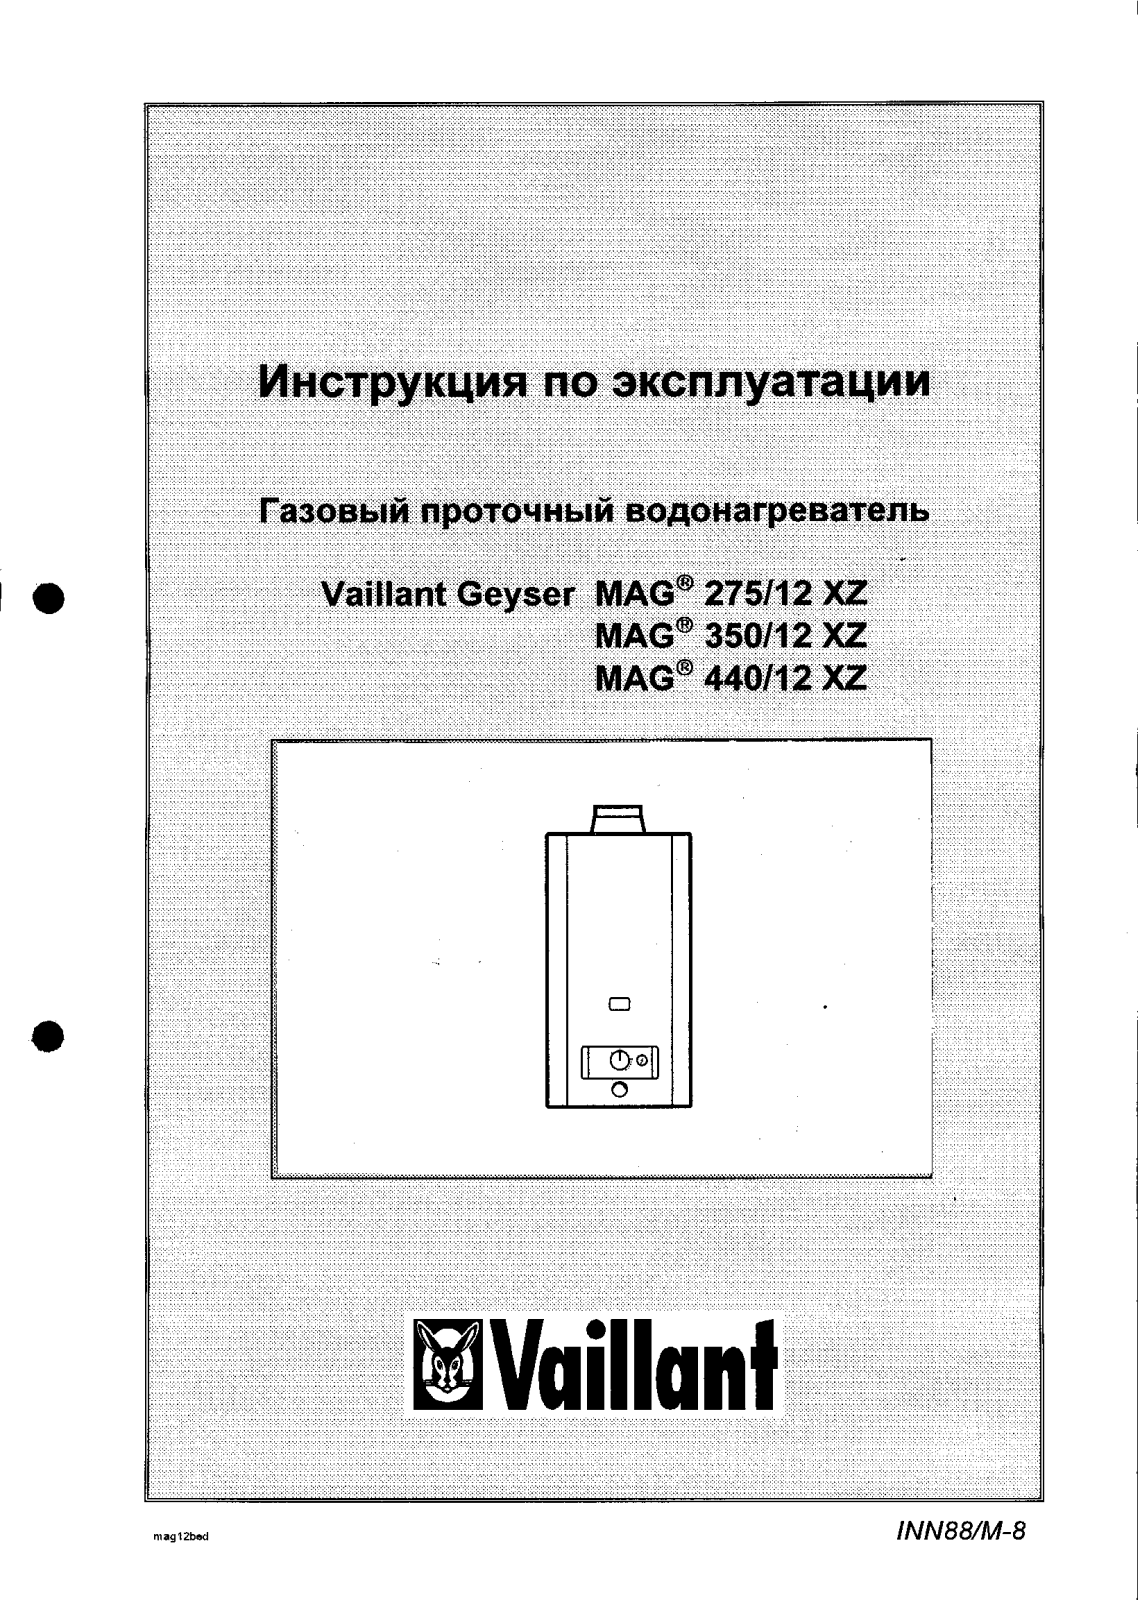 Vaillant MAG 350-12 XZ User Manual